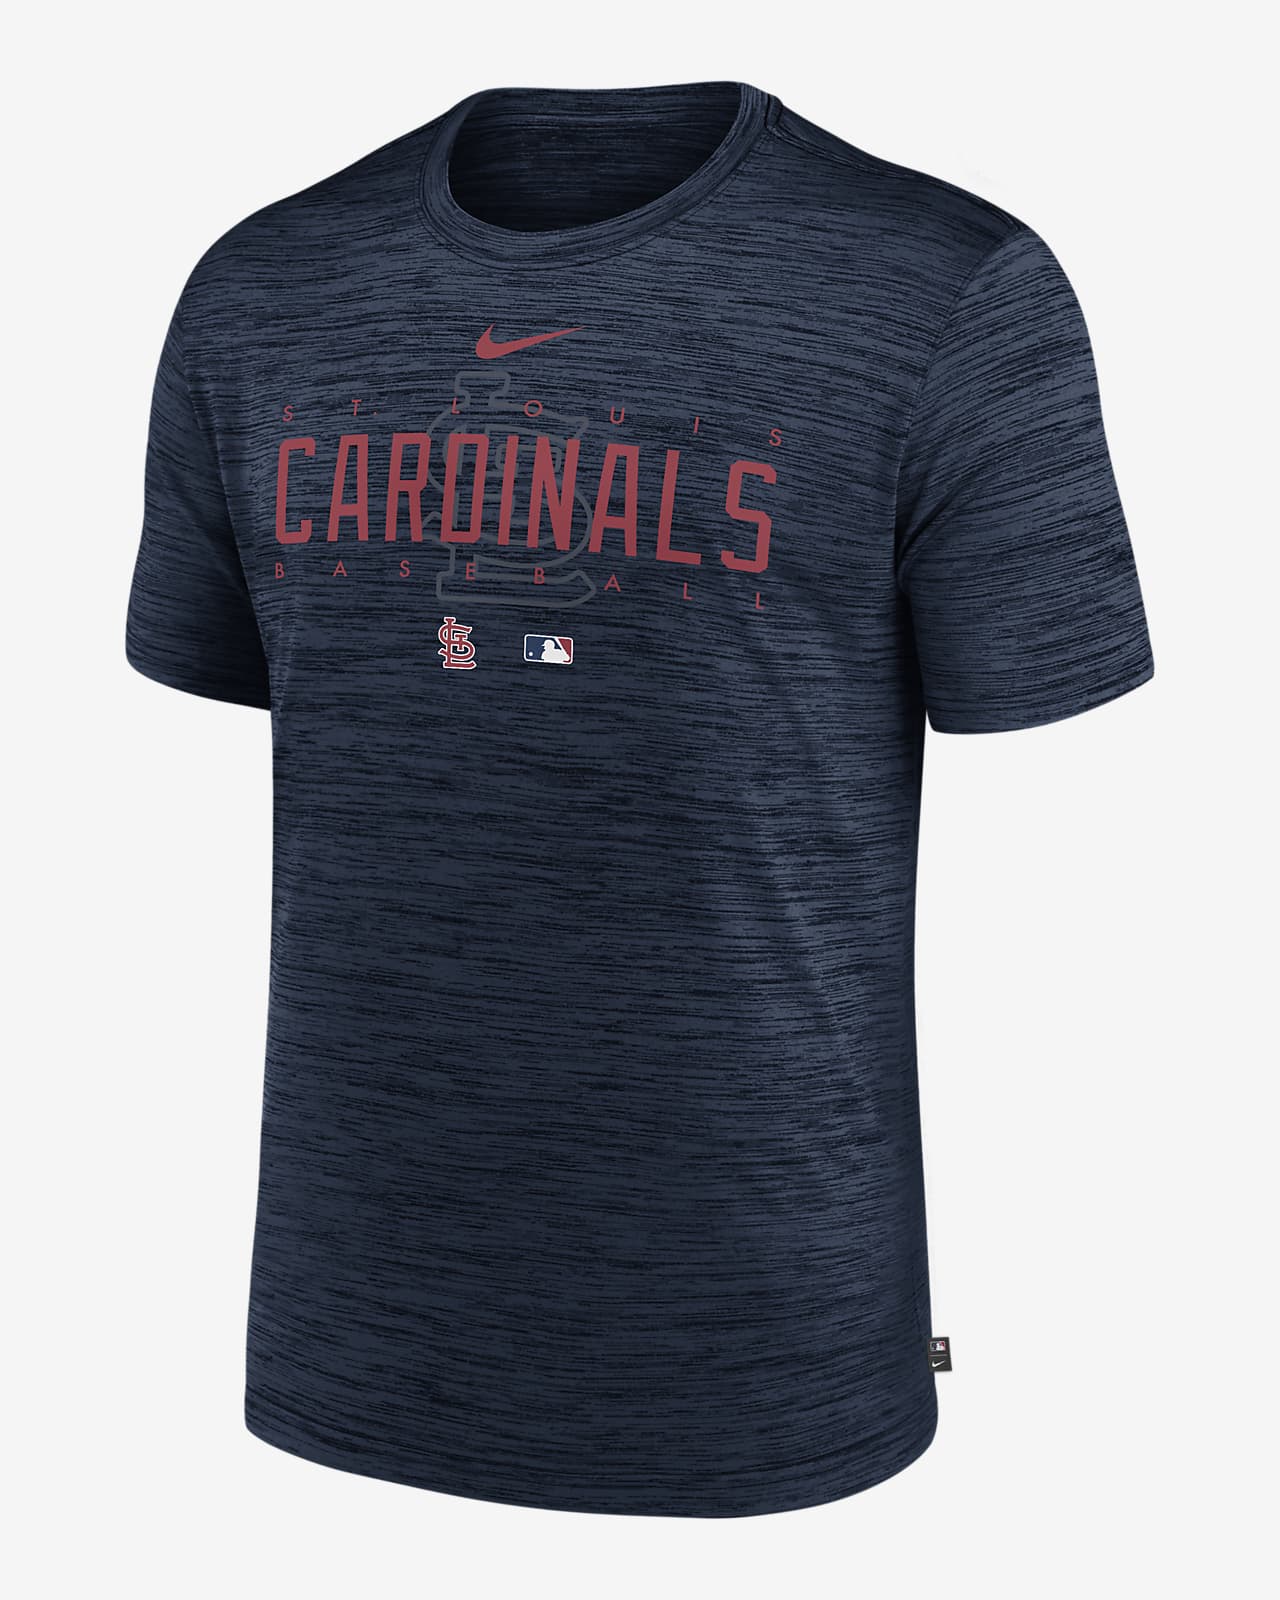 Men's Nike White St. Louis Cardinals MLB Practice T-Shirt